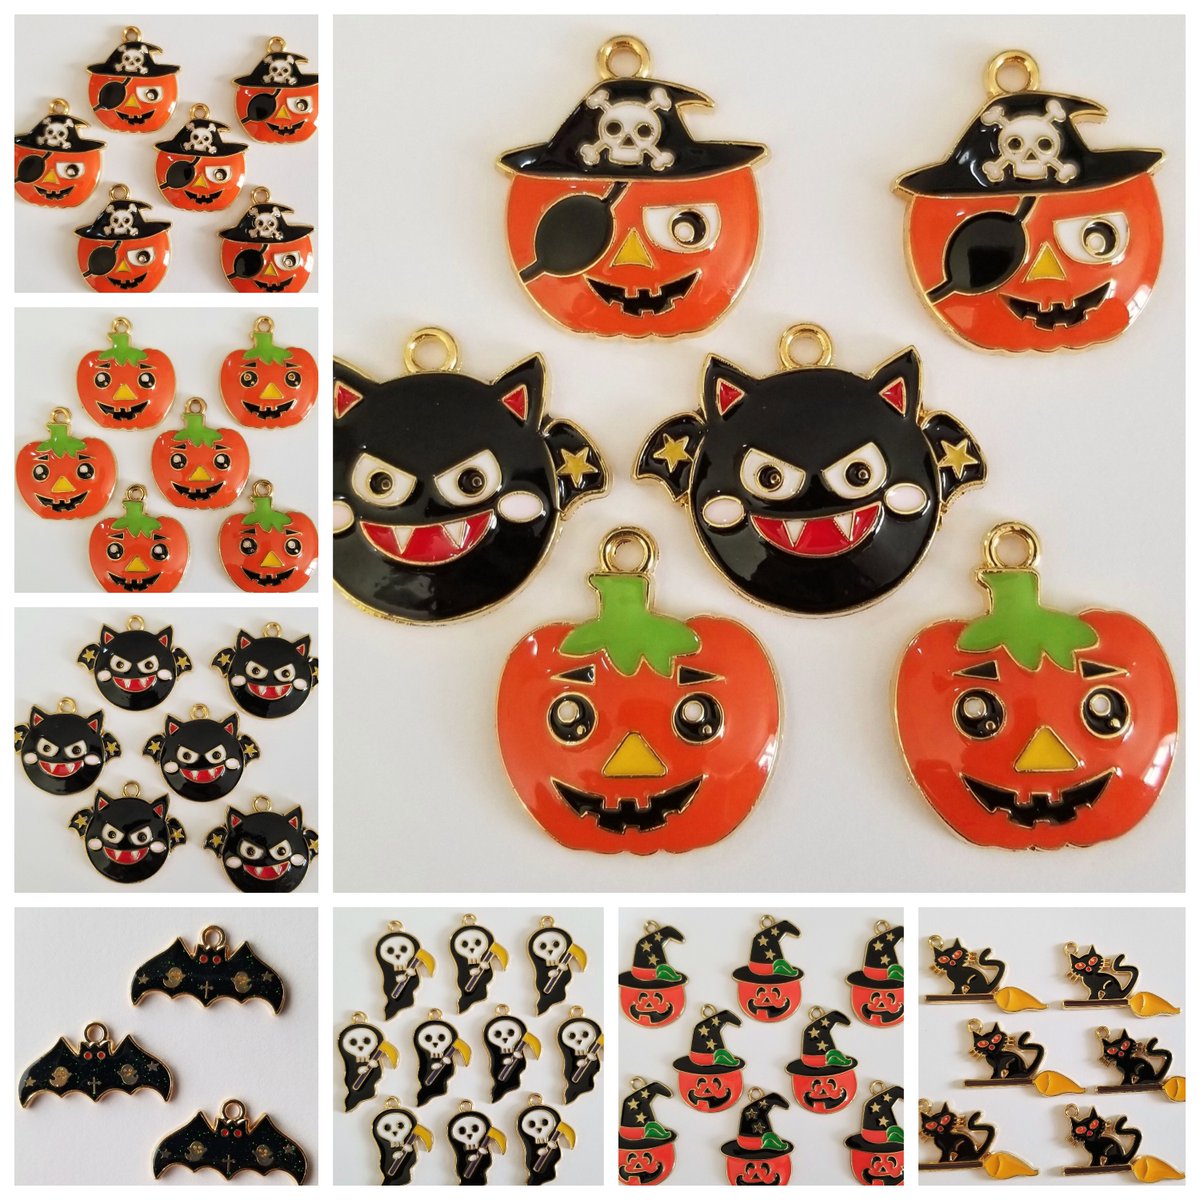 Alloy Enamel #Pendants #Charms #CUTE #HALLOWEEN #Pumpkin #Pirate #cats #bats #witch #jewellerymaking #cardmaking #crafts #craftsupplies #etsyuk #etsyshop #etsyseller by Saph1re etsy.me/3Qixo52 via @Etsy